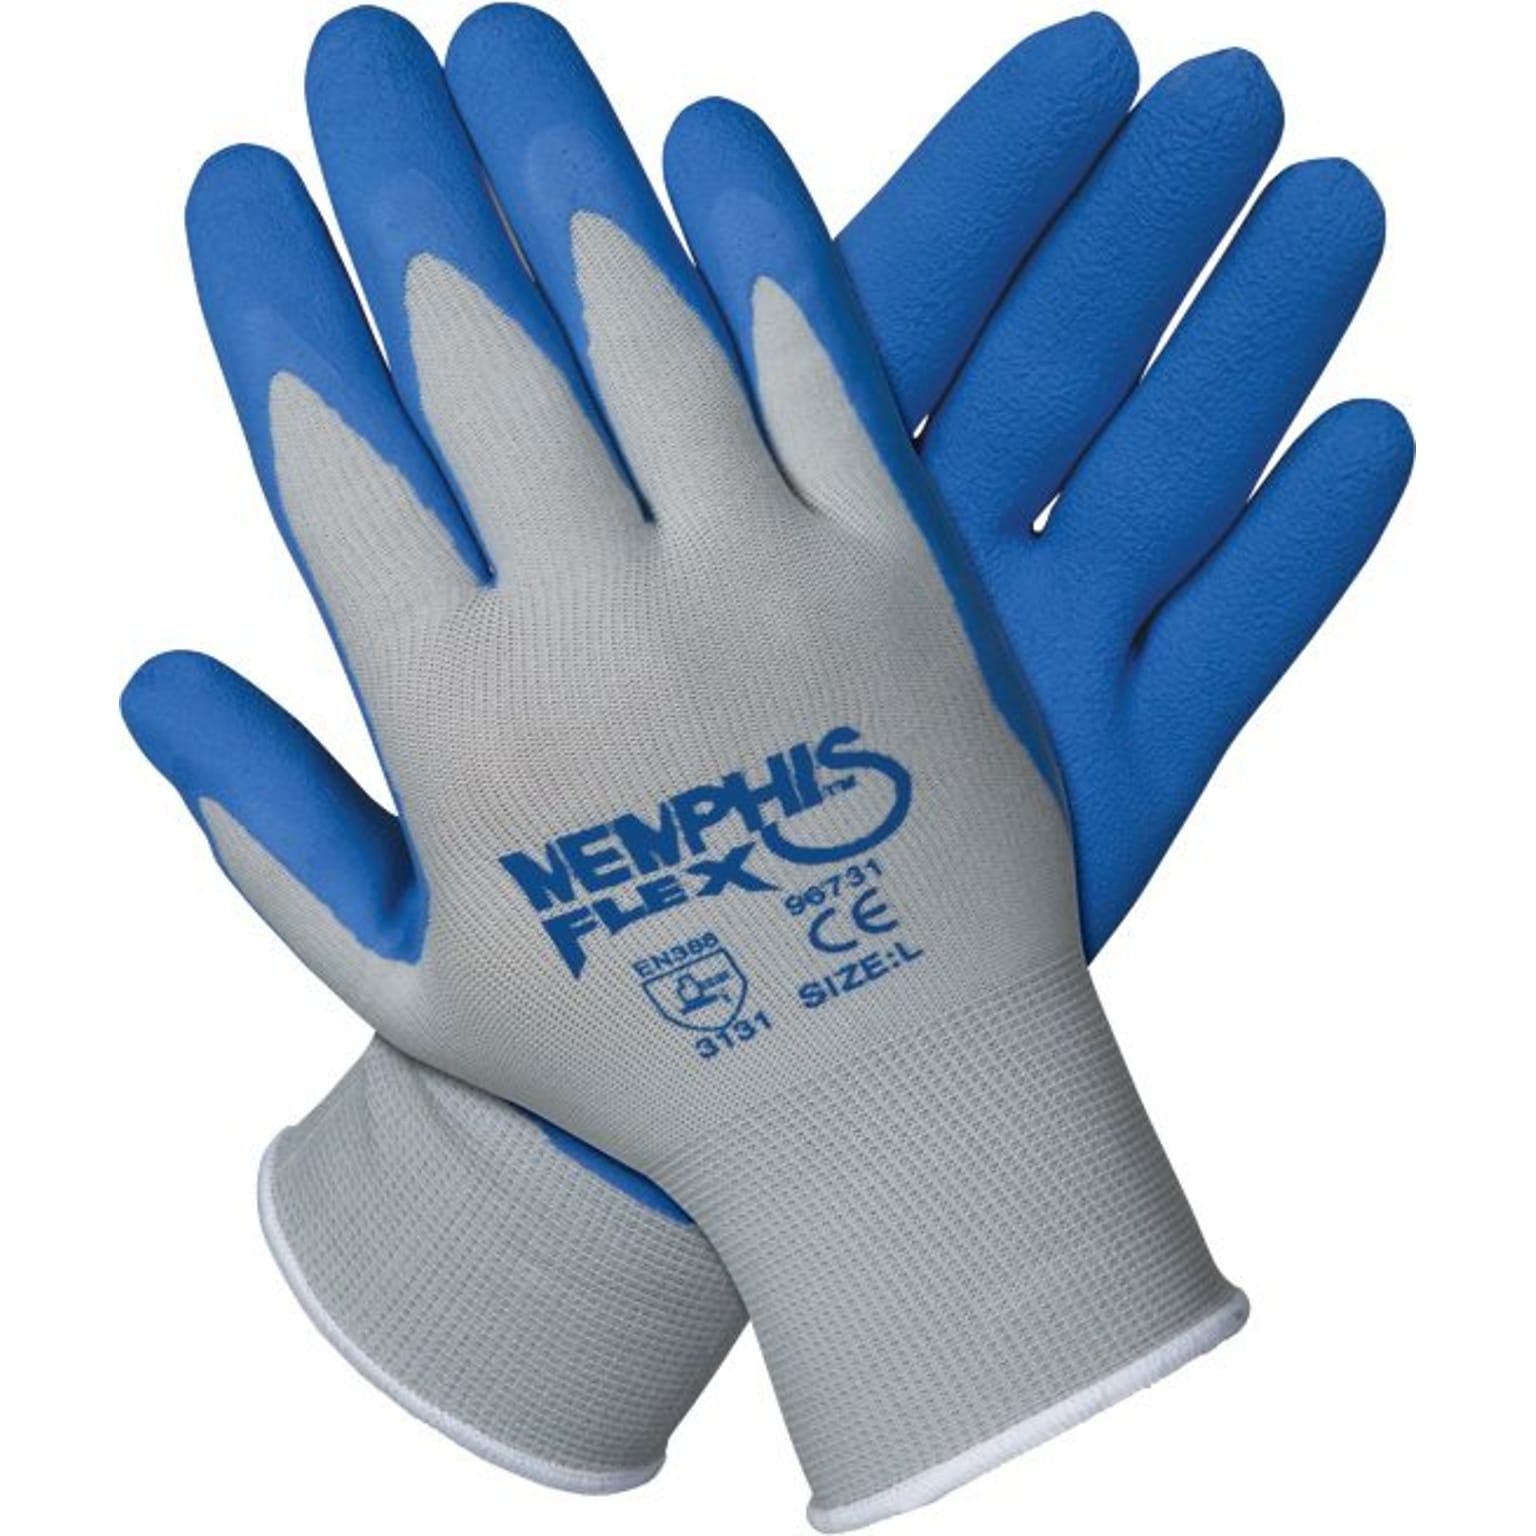 MCR Safety Memphis Flex Seamless Nylon Knit Gloves, X-Large, Blue/Gray, 12 Pair/Box (96731XL)